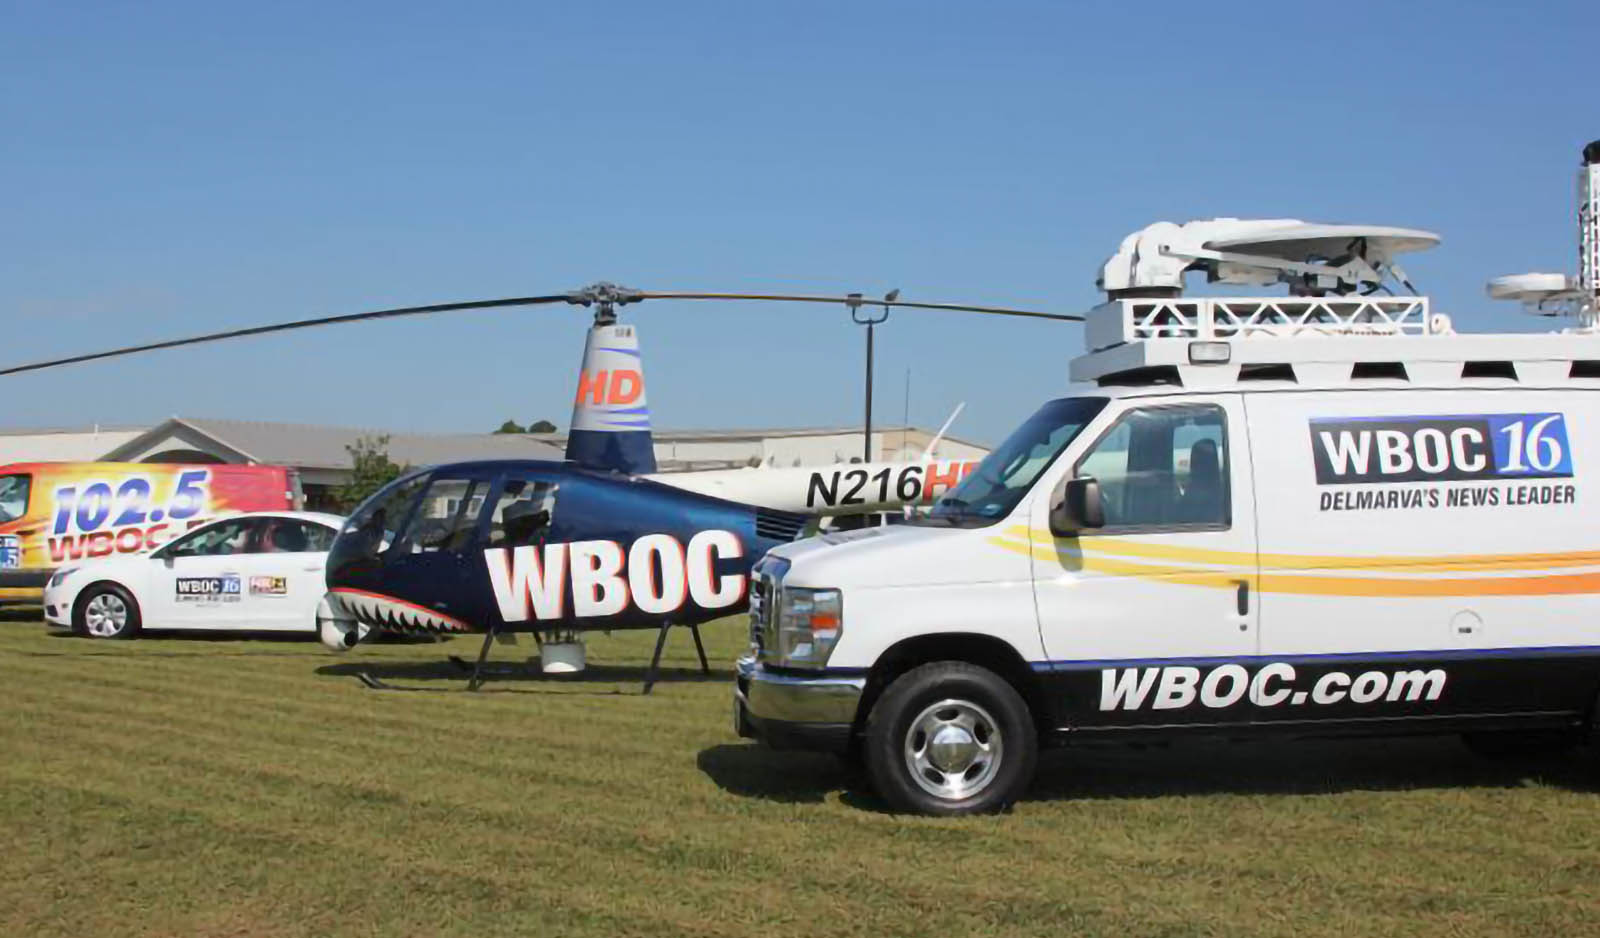 News Vehicles for WBOC News